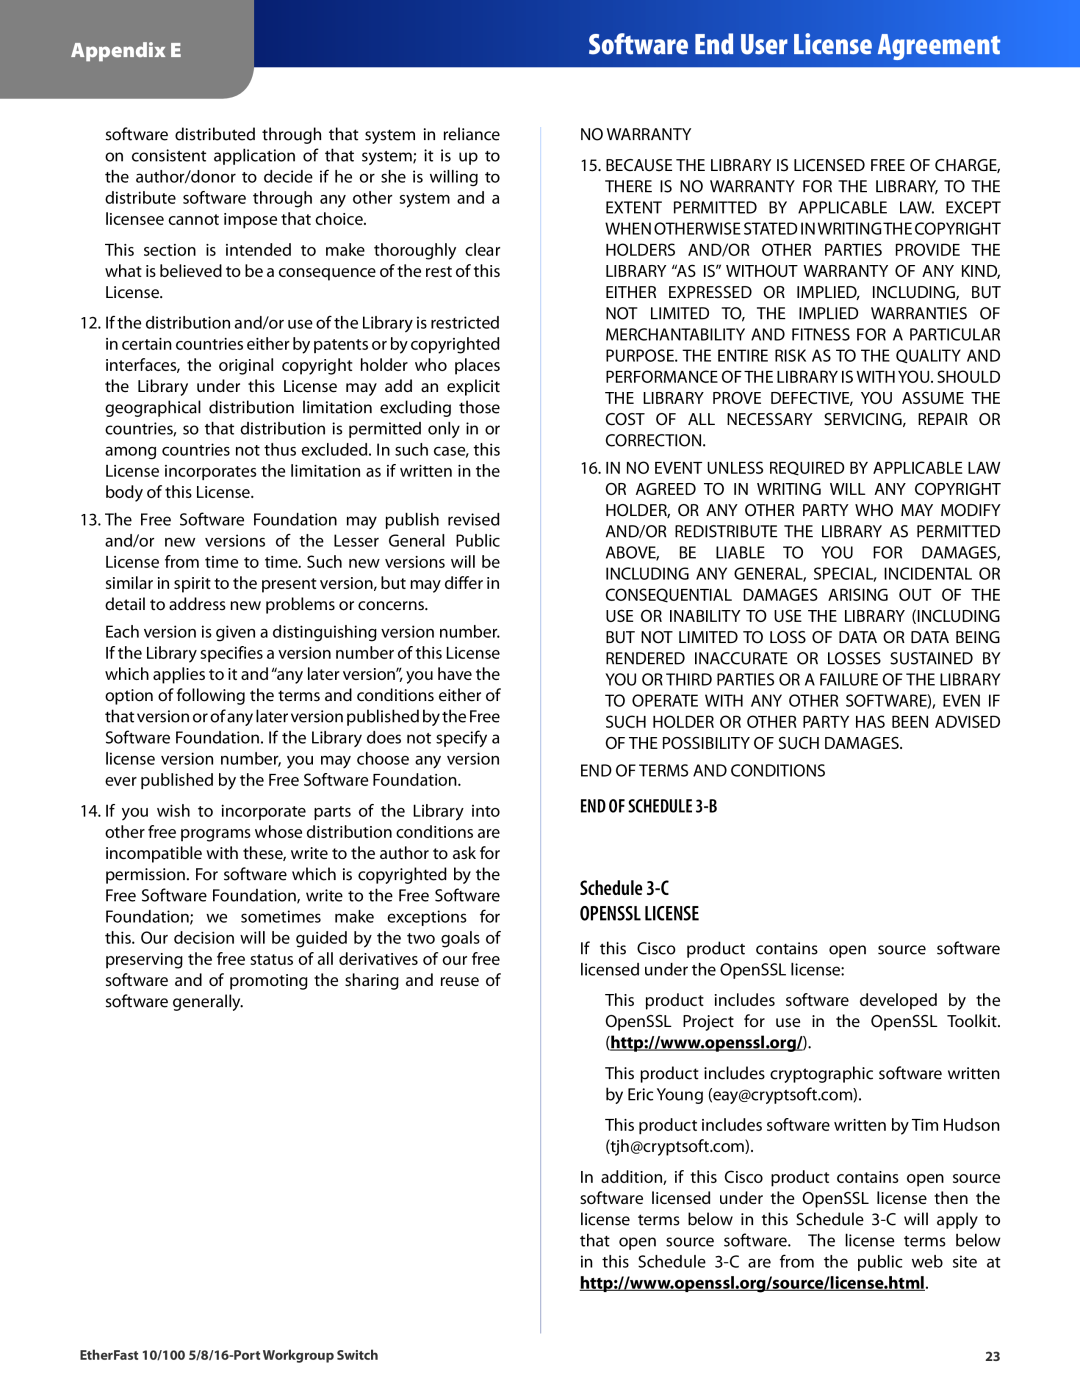 Linksys EZXS16W manual Schedule 3-C OPENSSL LICENSE, END OF SCHEDULE 3-B, Software End User License Agreement, Appendix E 